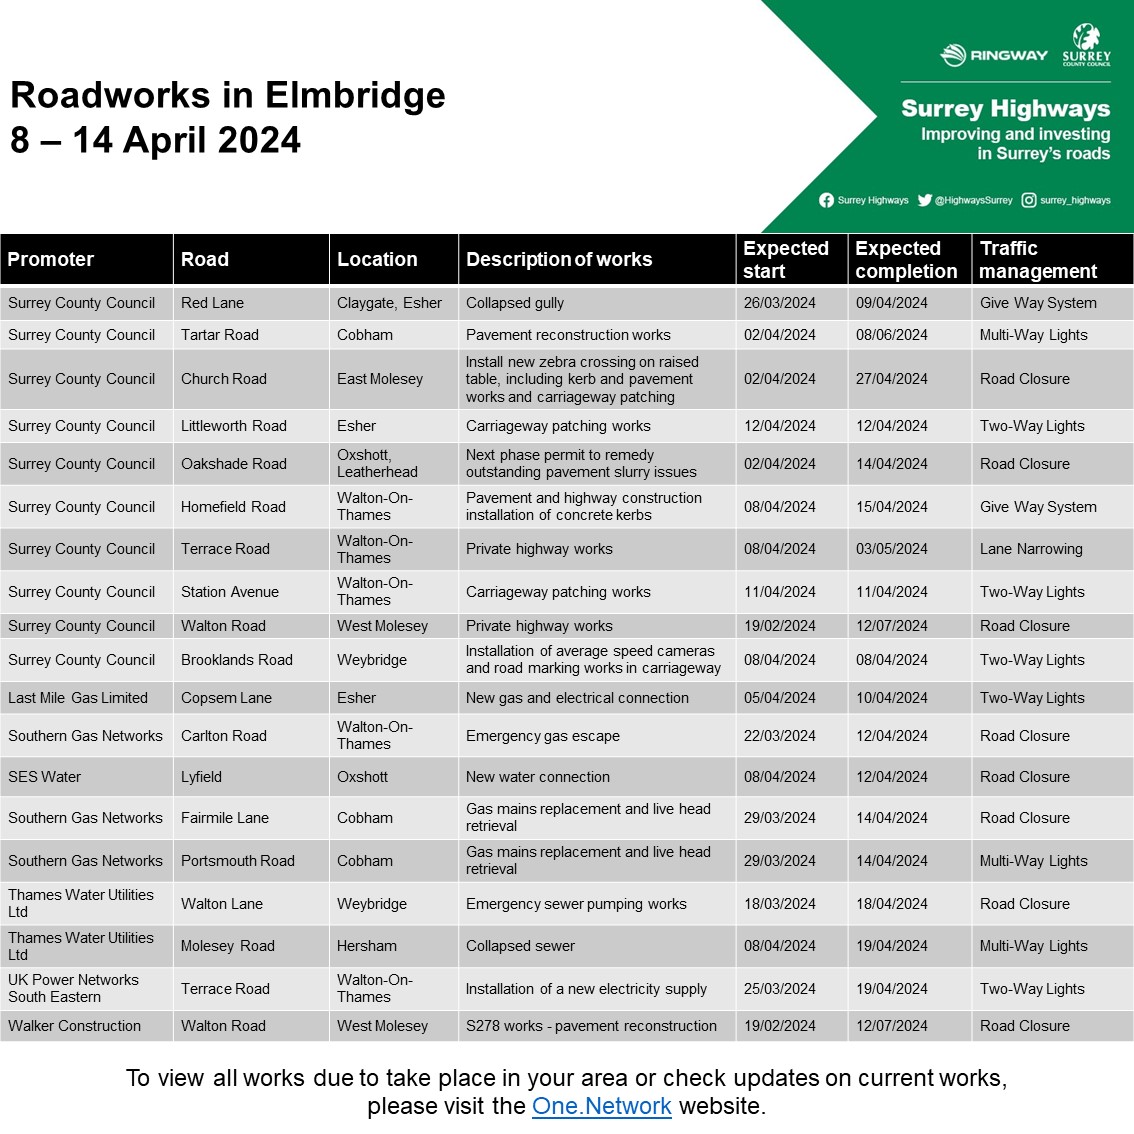 🚦 Elmbridge planned roadworks

🗓️ Week commencing 8/4/24

#Elmbridge #Esher #Weybridge #WaltonOnThames #Cobham #Claygate #ThamesDitton @ElmbridgeBC 

For more see orlo.uk/aR1dl